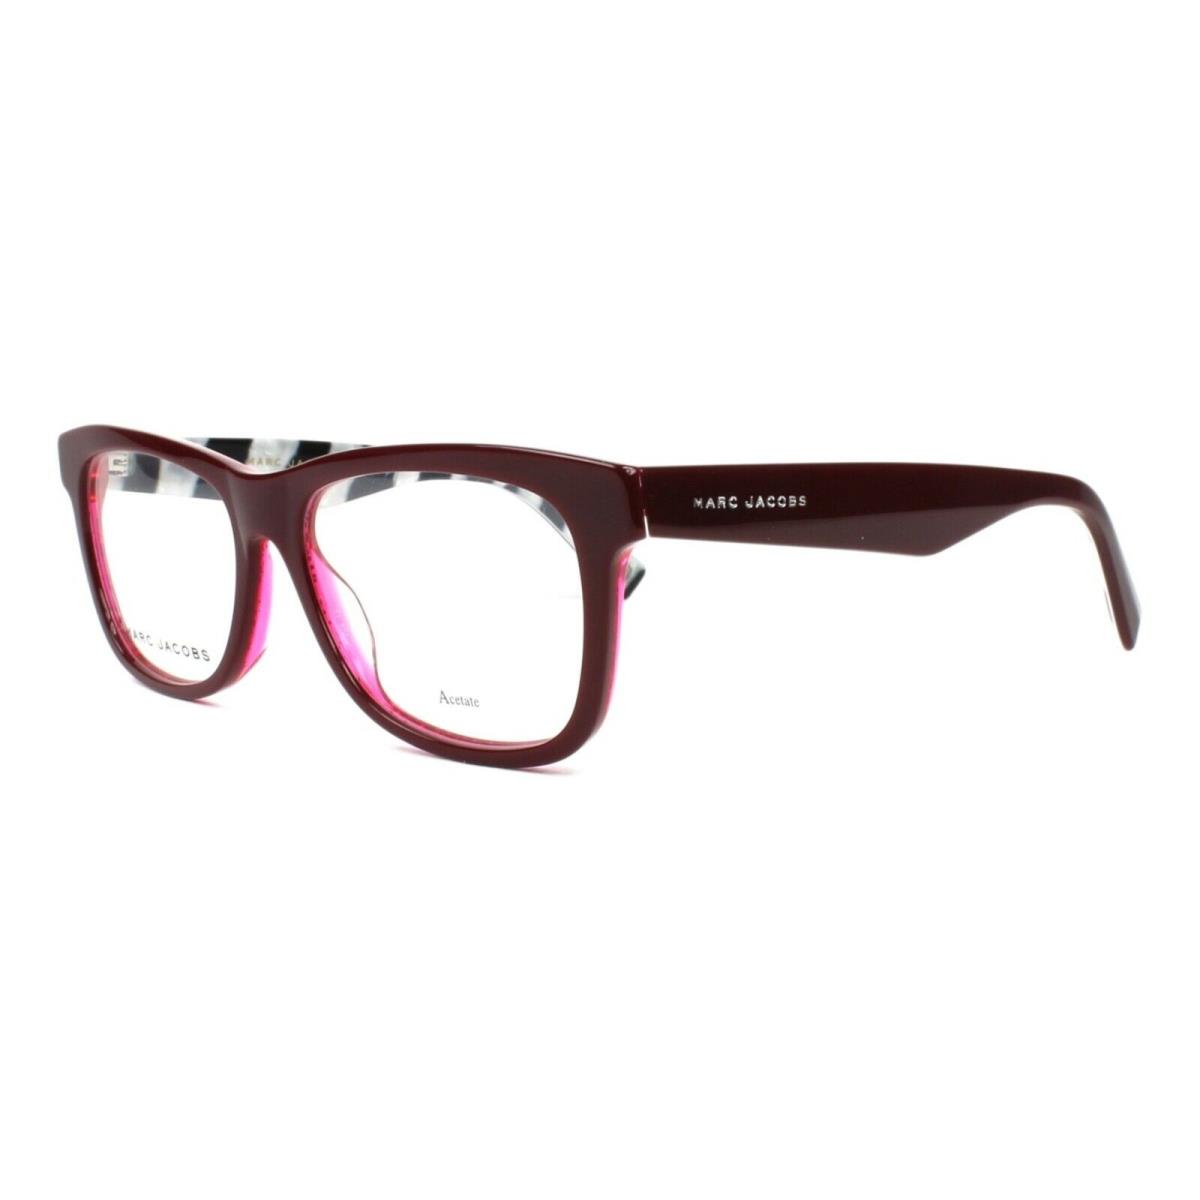 Marc Jacobs eyeglasses OSW - Burgundy Frame 2